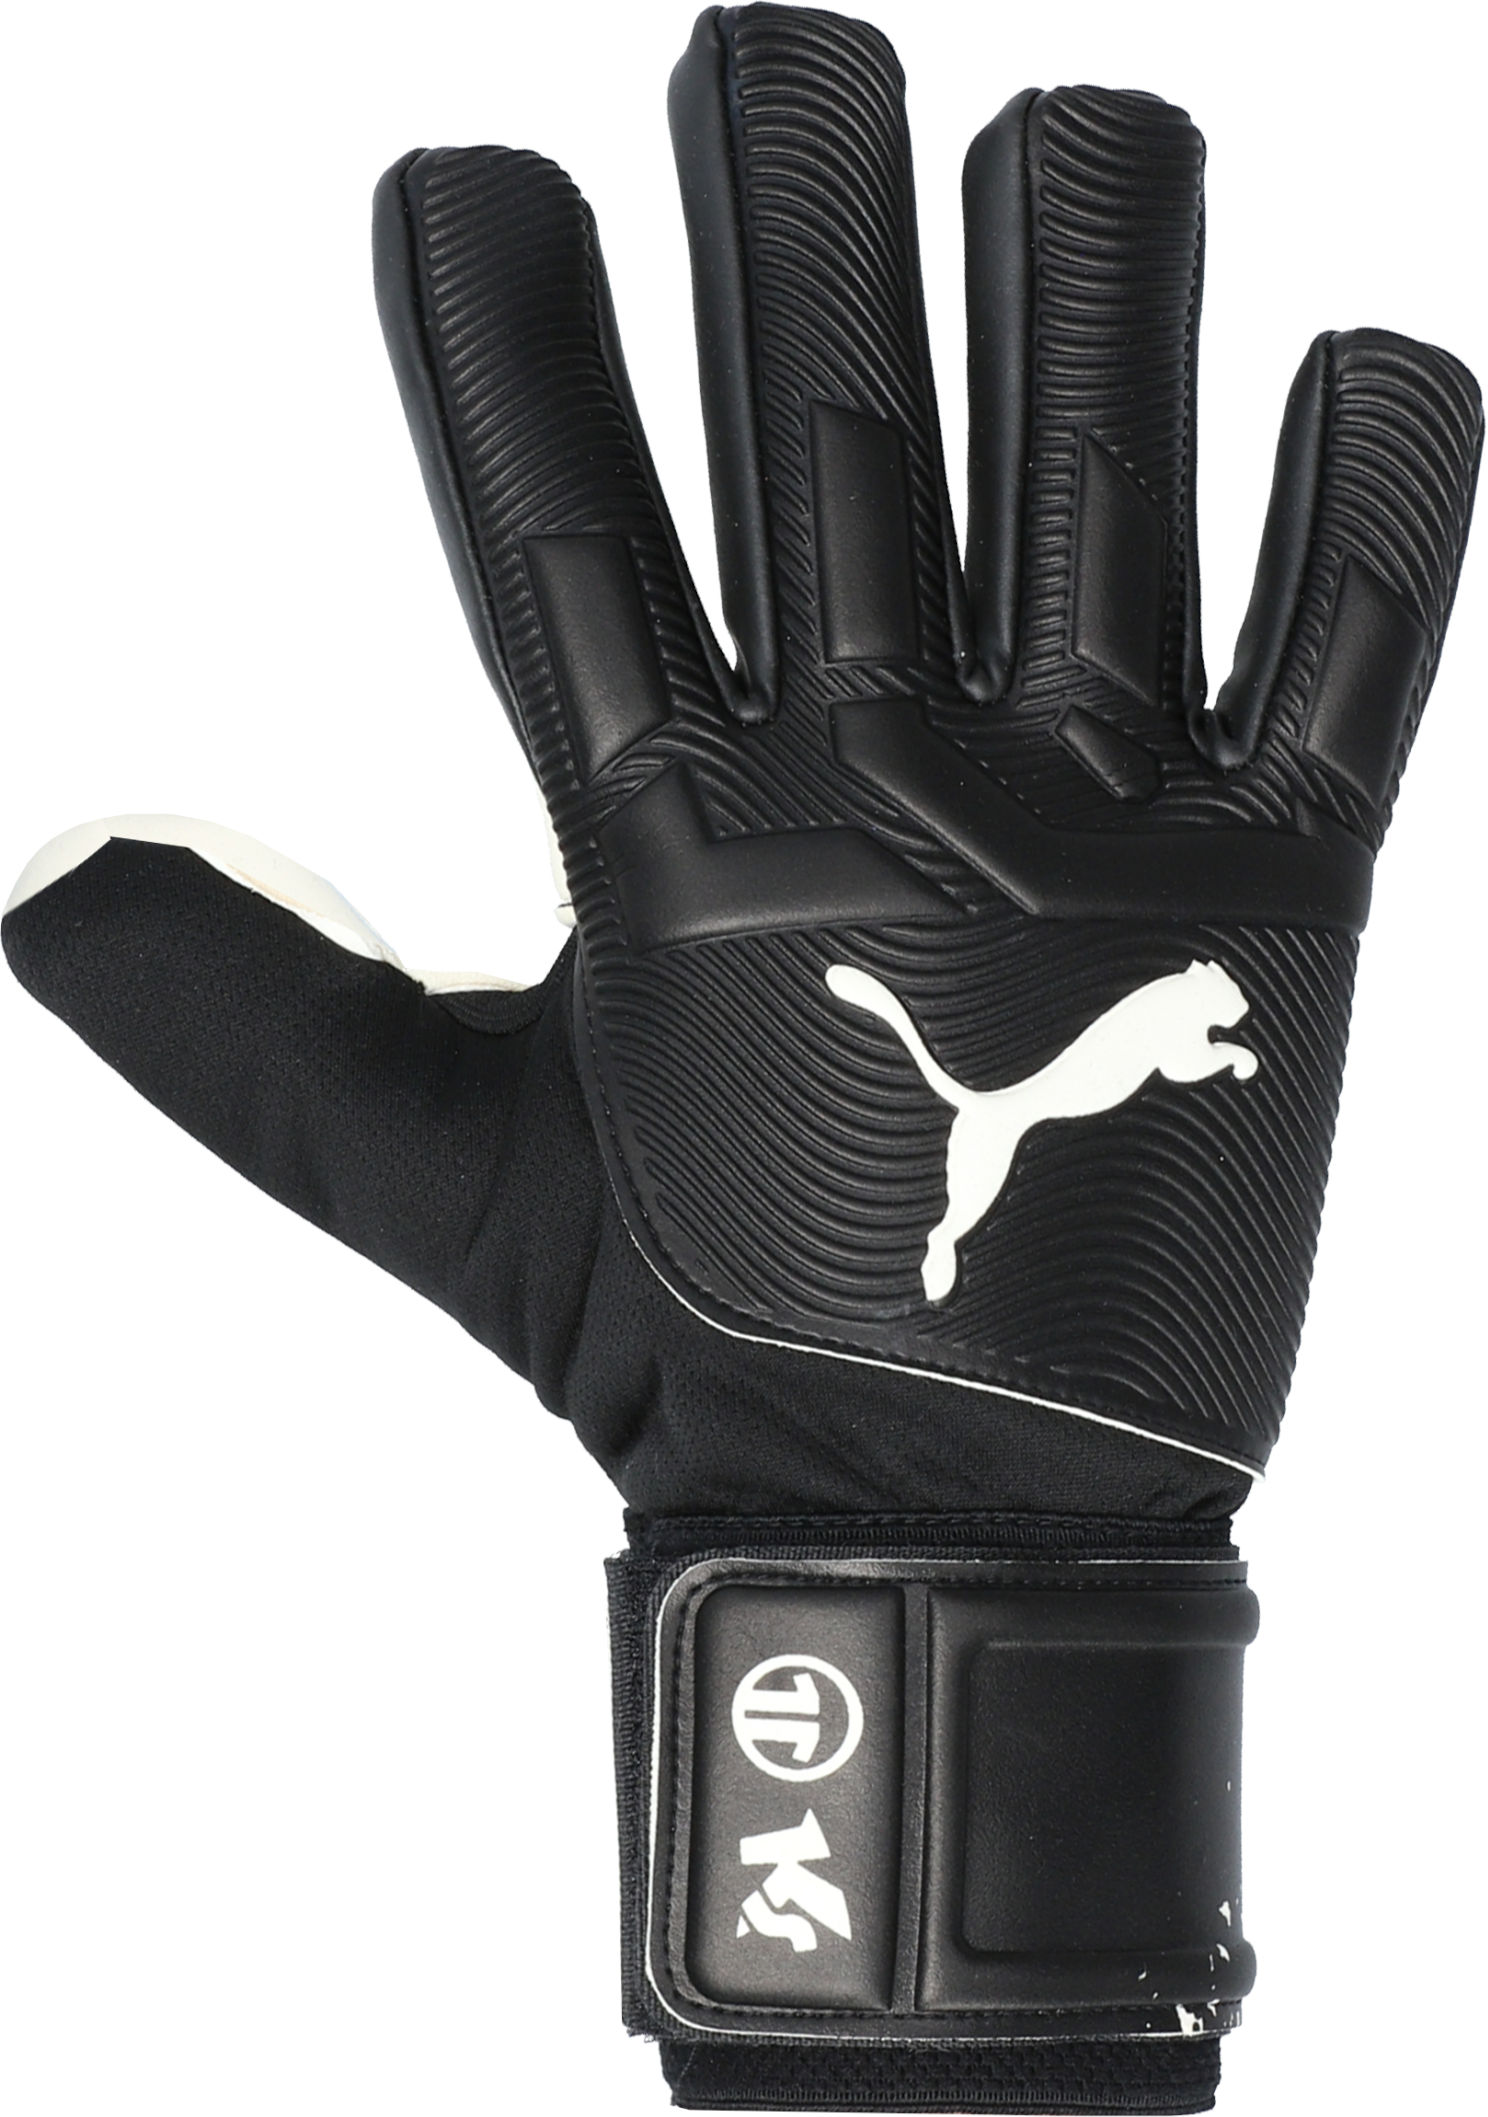 Goalkeeper's gloves Puma FUTURE Z Grip KS SMU